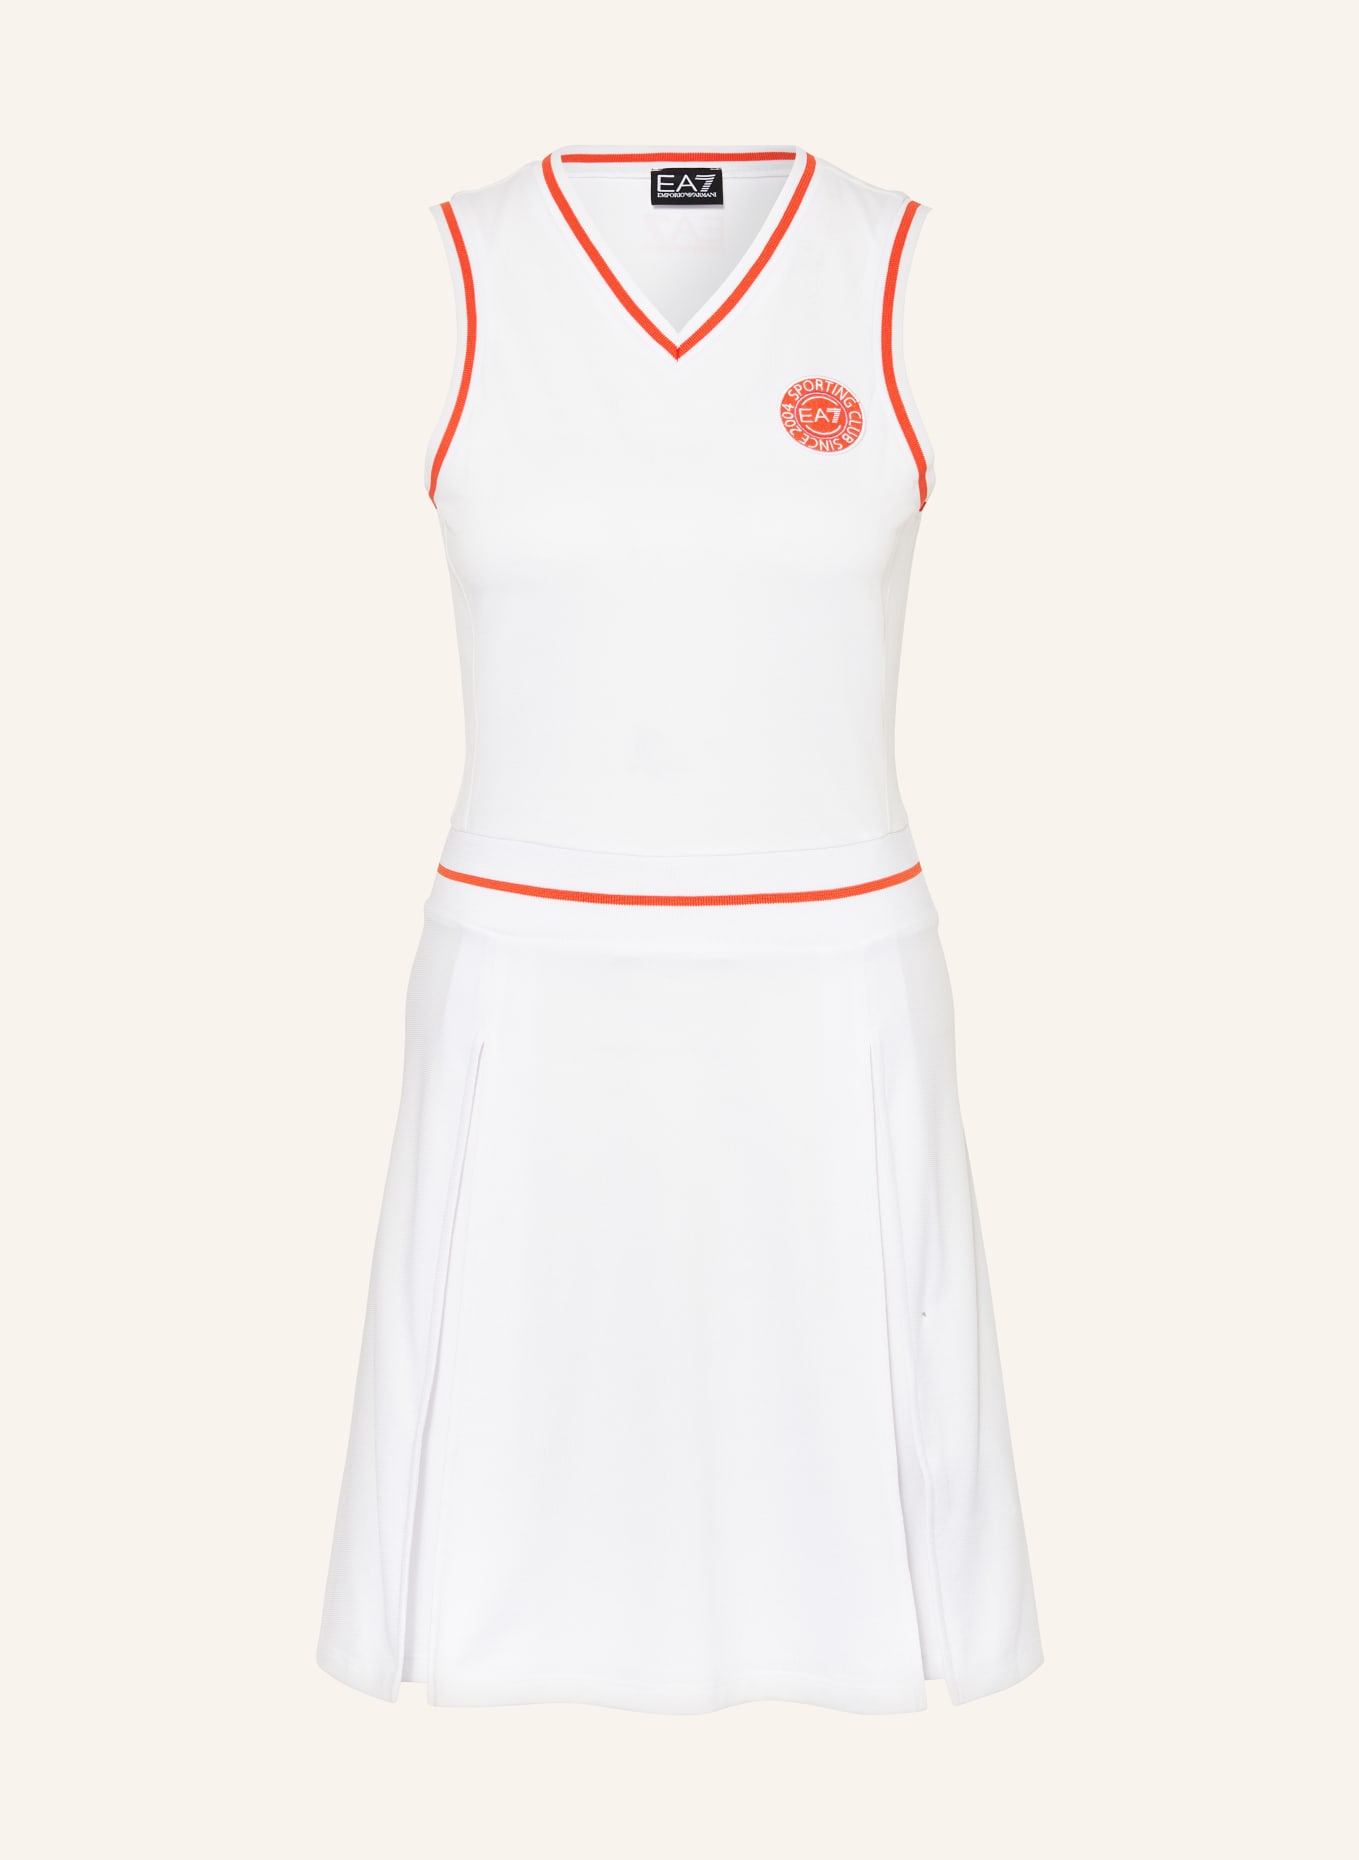 EA7 EMPORIO ARMANI Tenniskleid, Farbe: WEISS/ ORANGE (Bild 1)